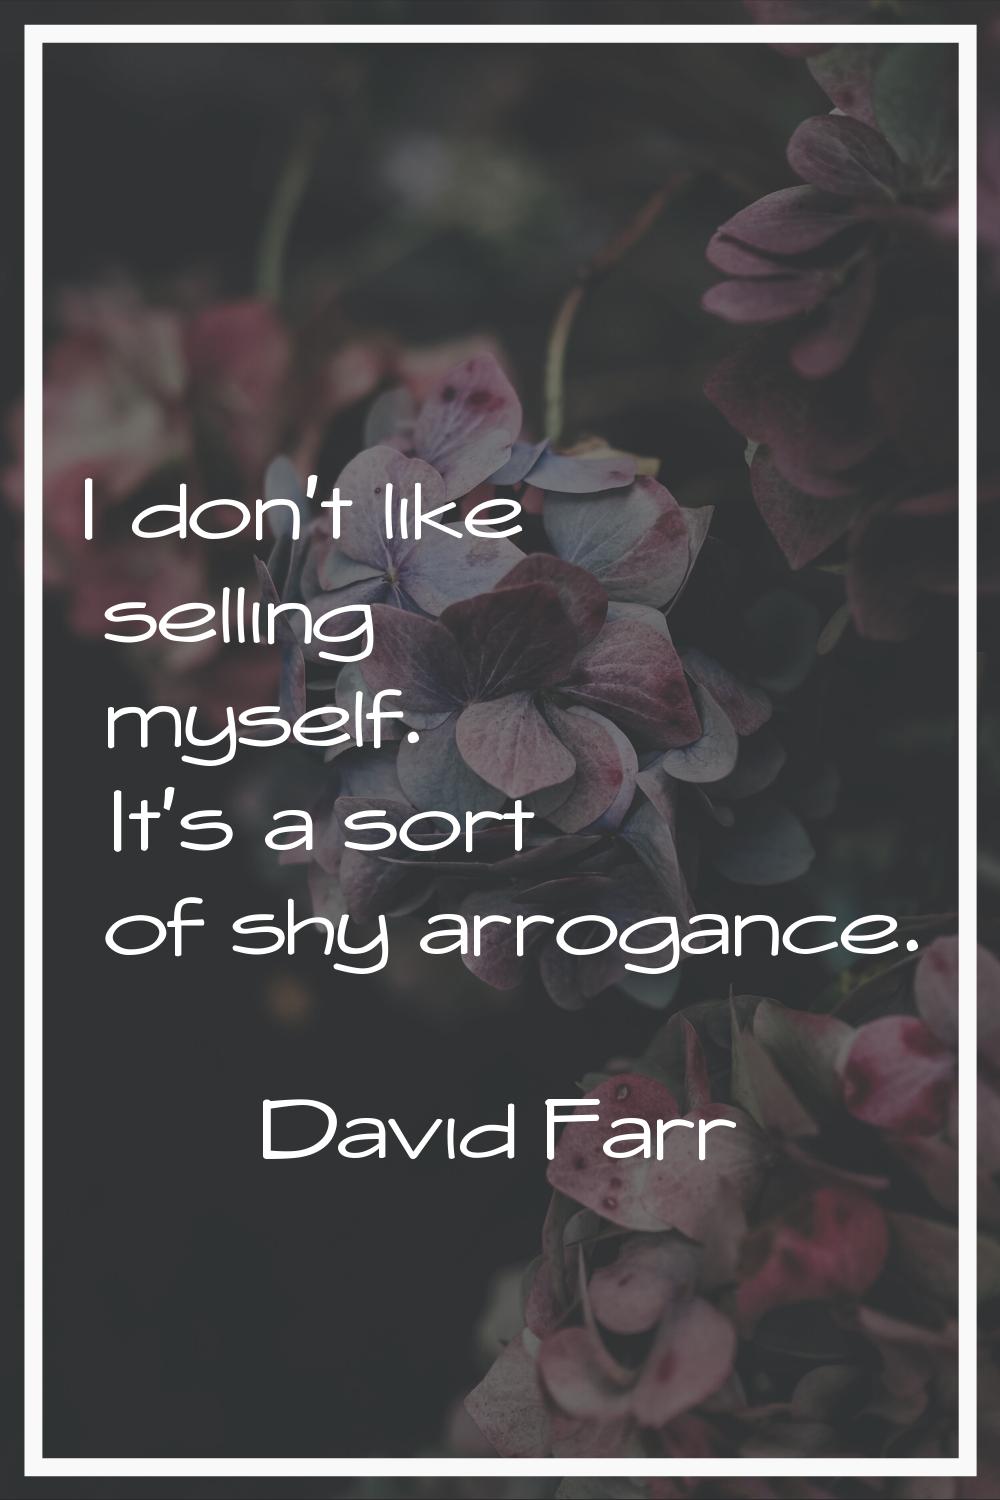 I don't like selling myself. It's a sort of shy arrogance.